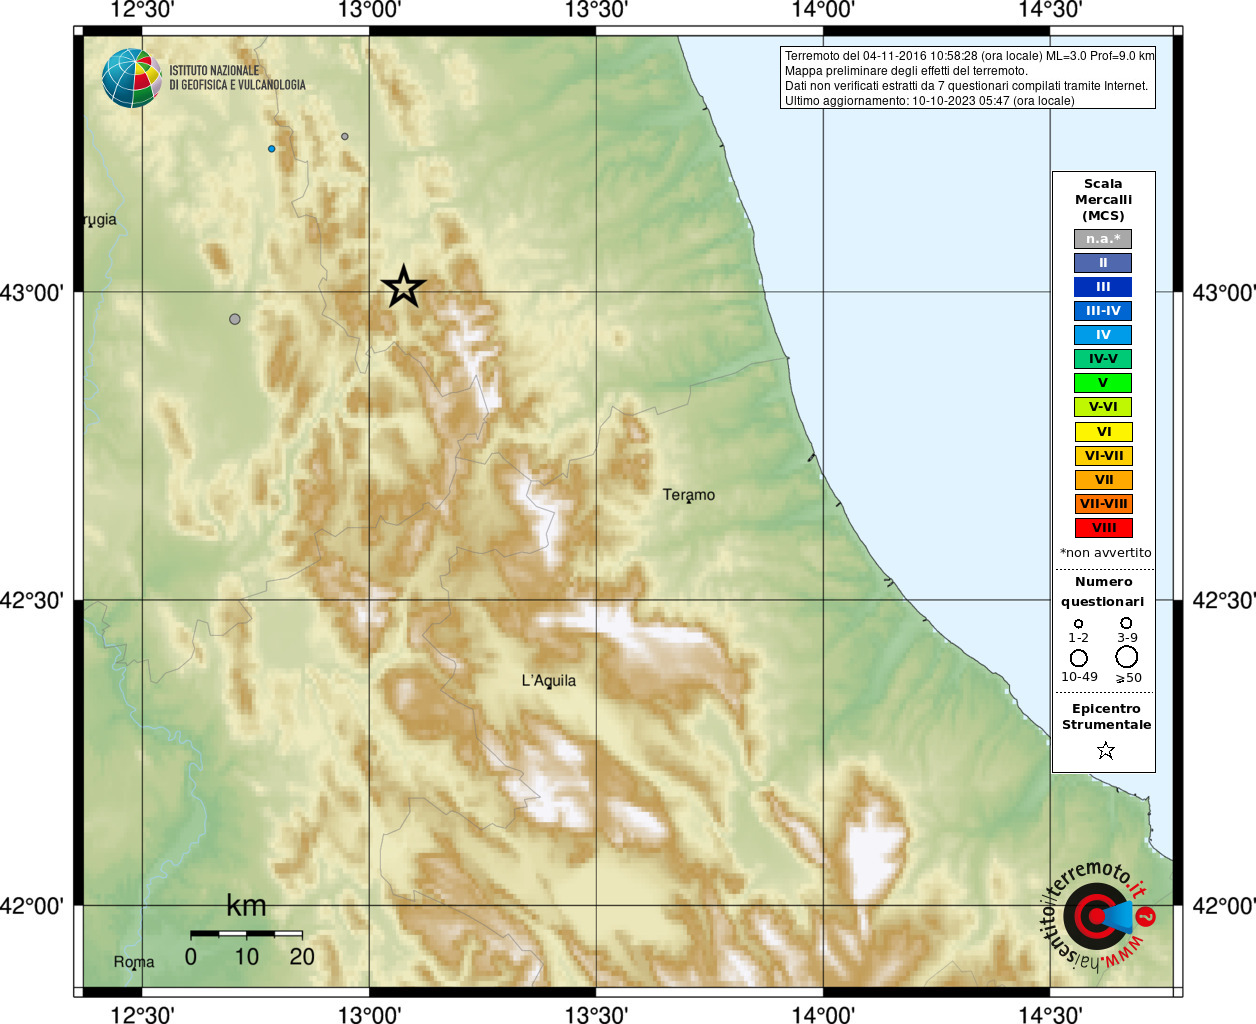 Earthquake 4 km SW Fiordimonte (MC), Magnitude ML 3.0, 4 November 2016 time 10:58:28 ...1253 x 1024